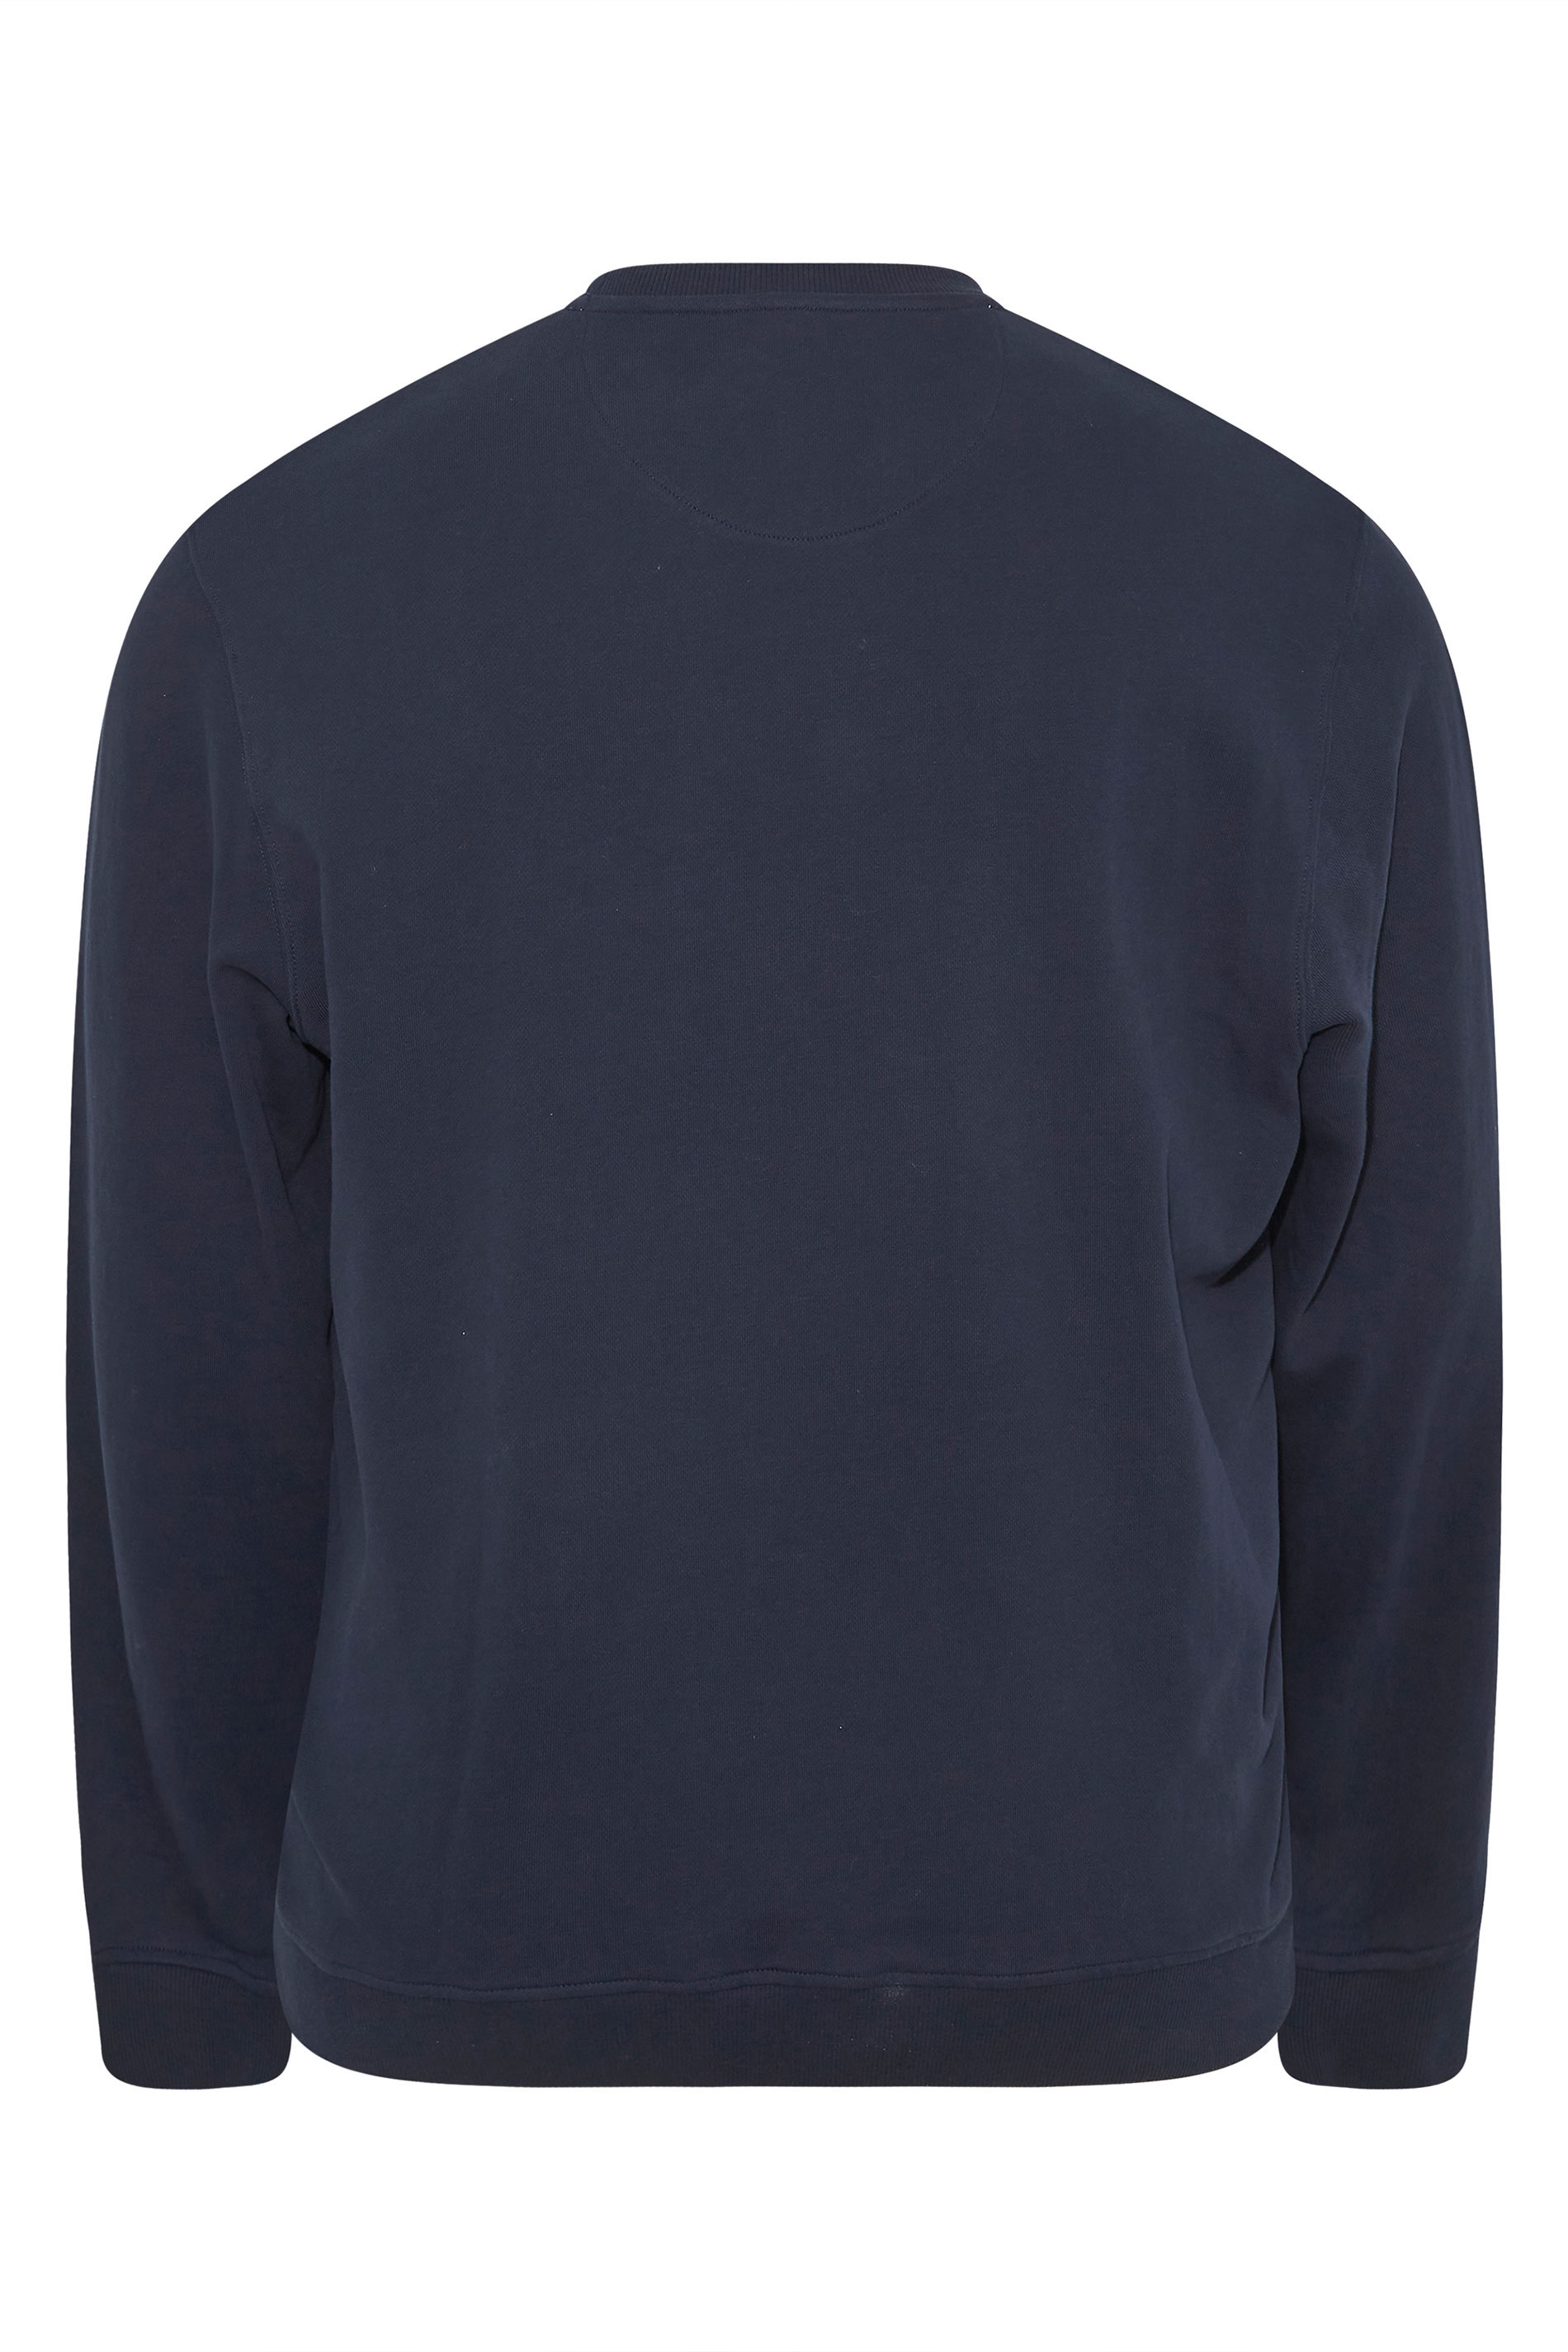 FARAH Navy Blue Crewneck Sweatshirt | BadRhino 3